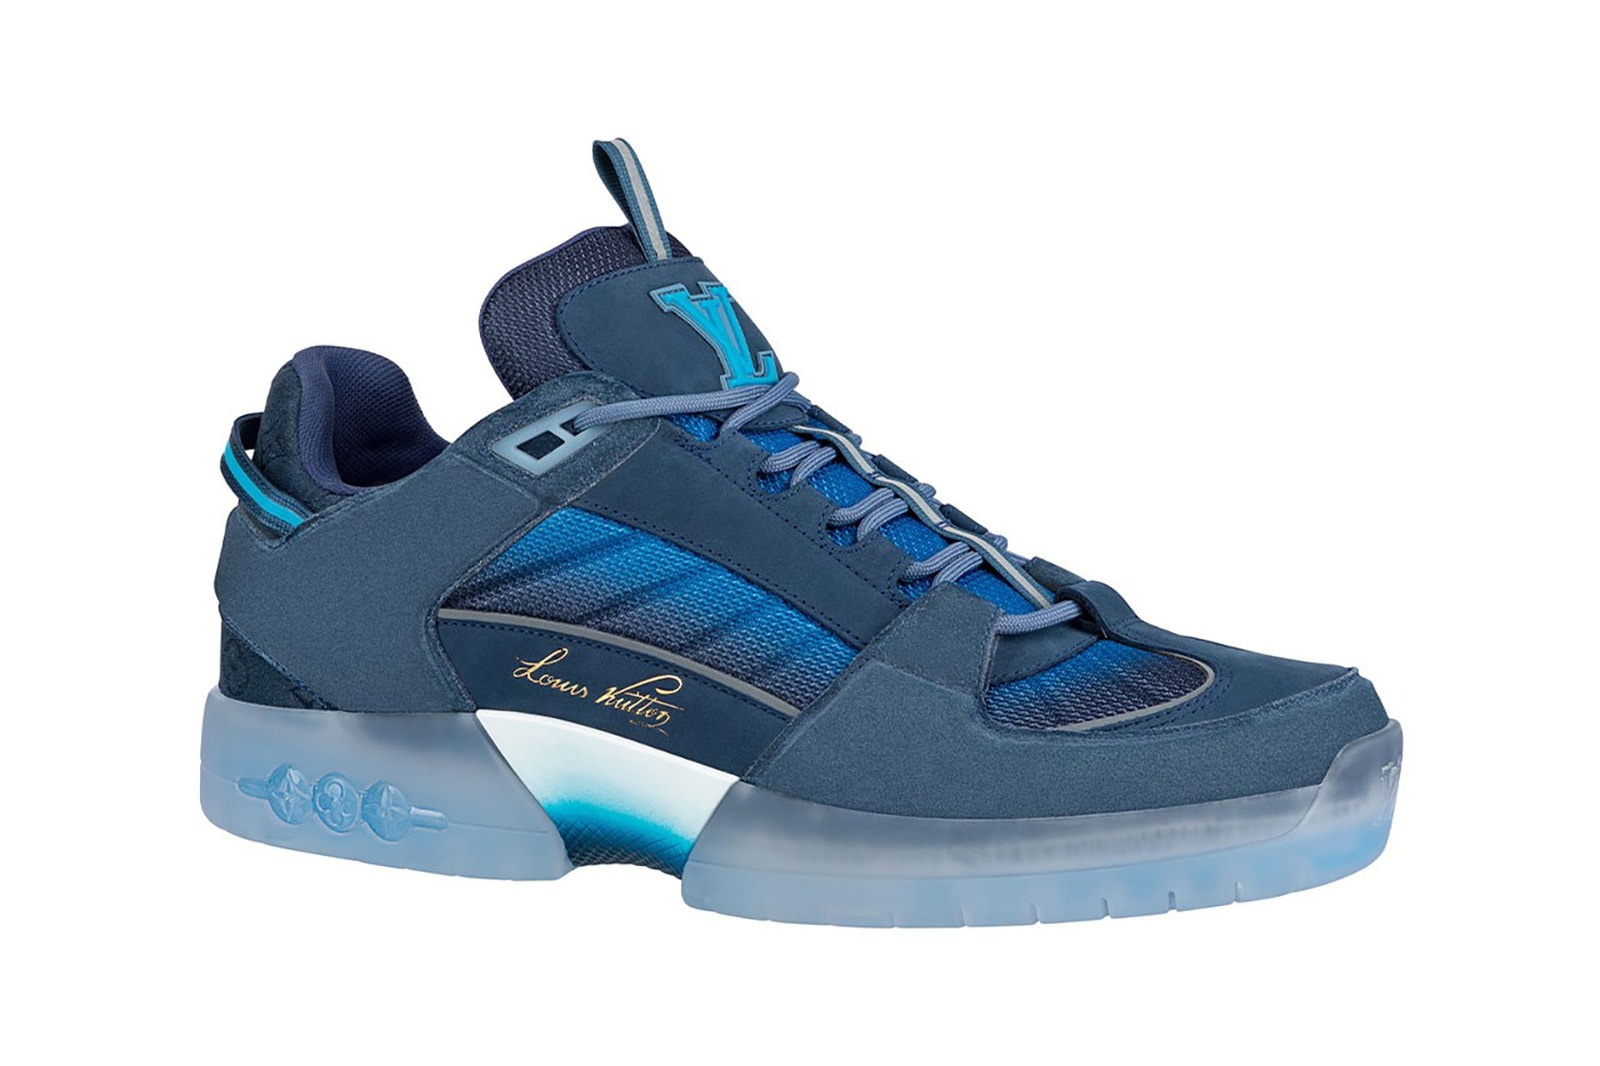 louis vuitton pre spring 2021 a view skate sneakers white orange blue sneakerhead footwear shoes